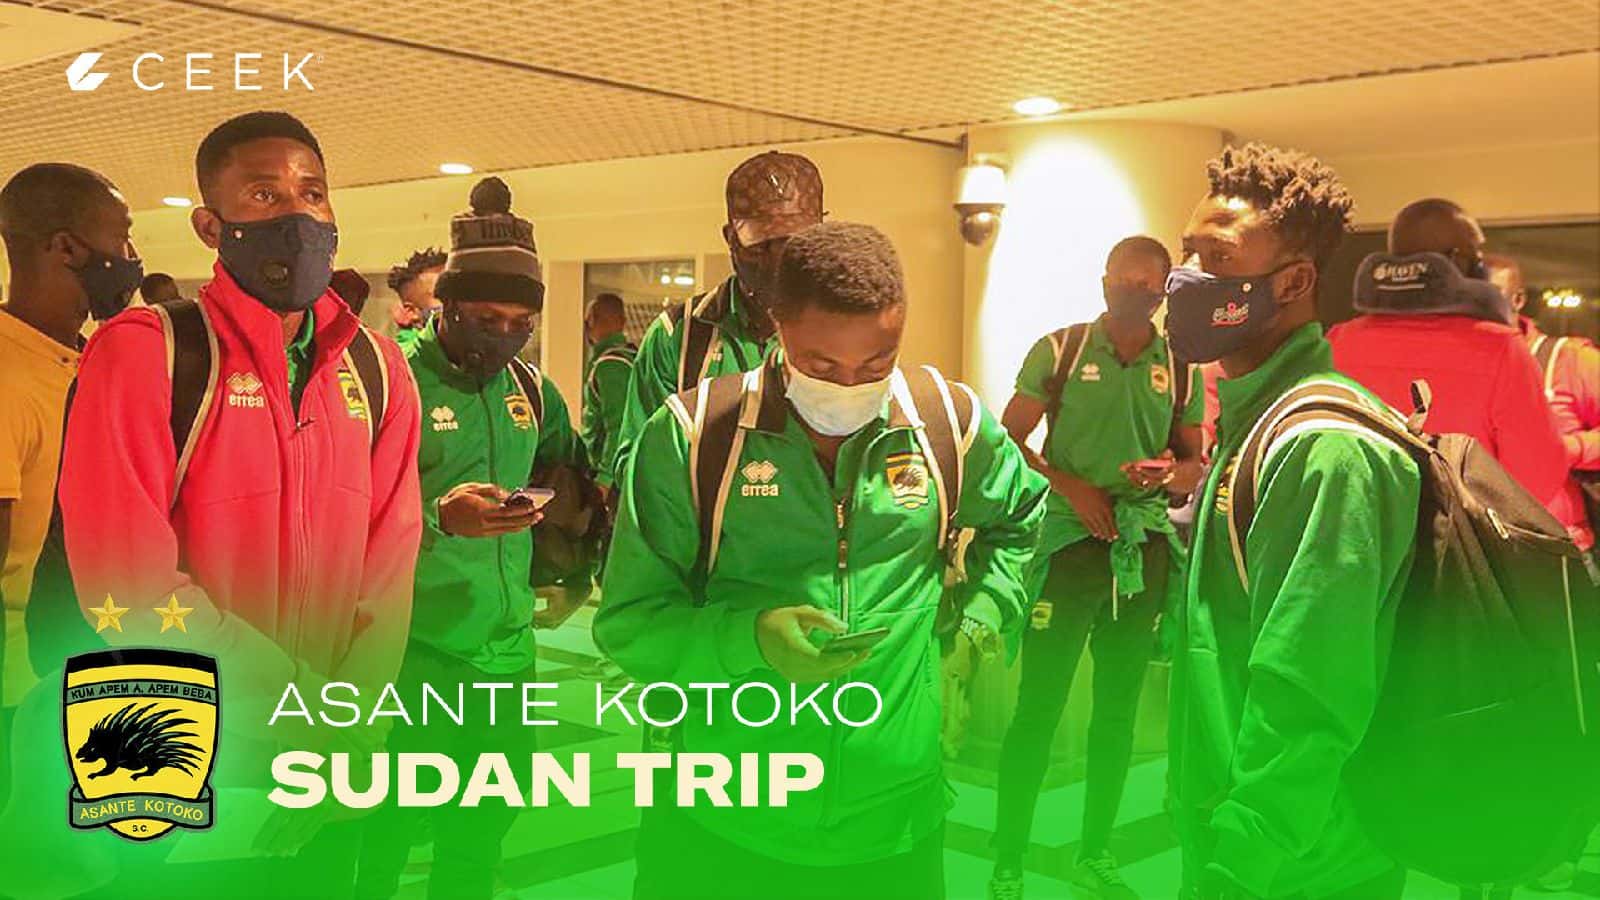 Al Hilal vrs Asante Kotoko - Sudan Trip